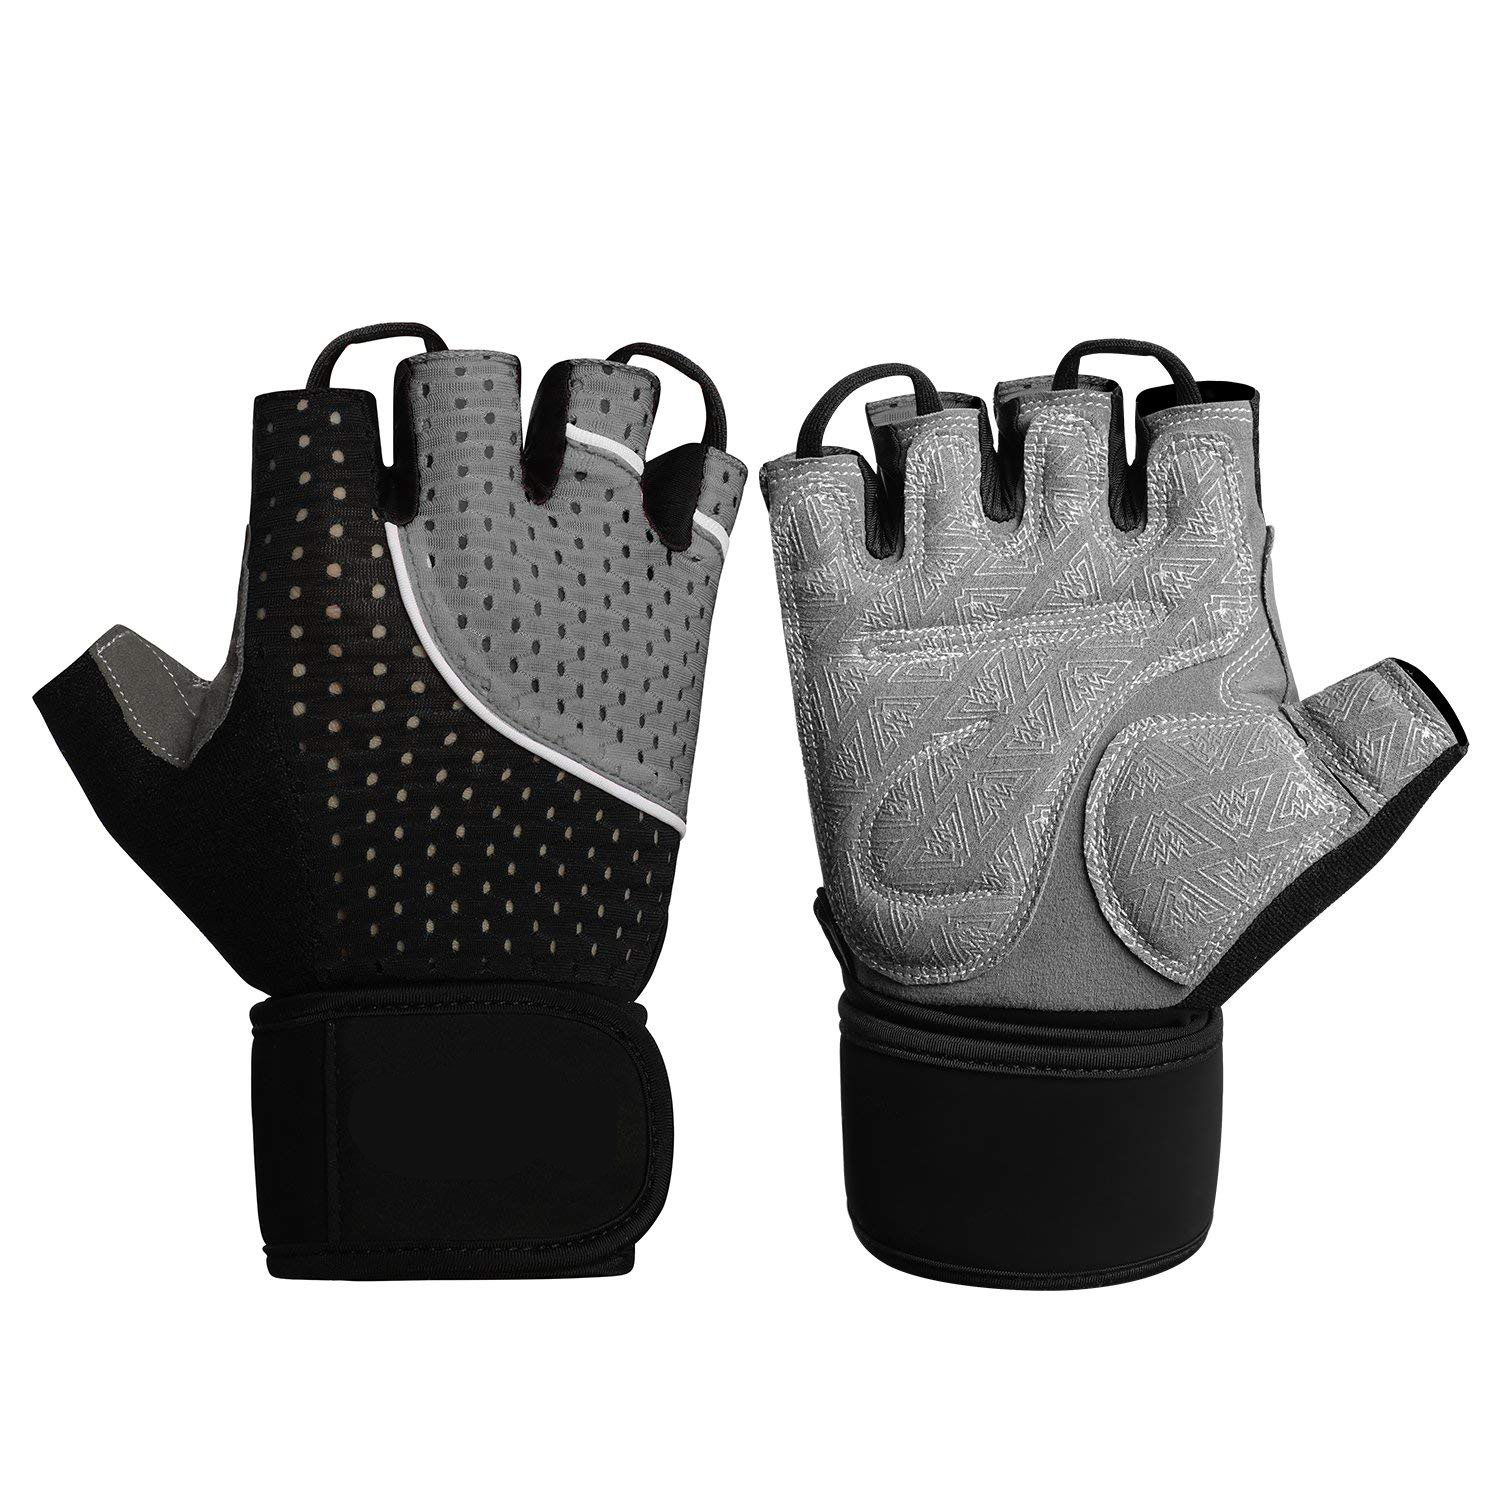 Weight Lifting Gloves for Women & Men, Anti-Slip Silica Gel Grip Padded fitness Gloves